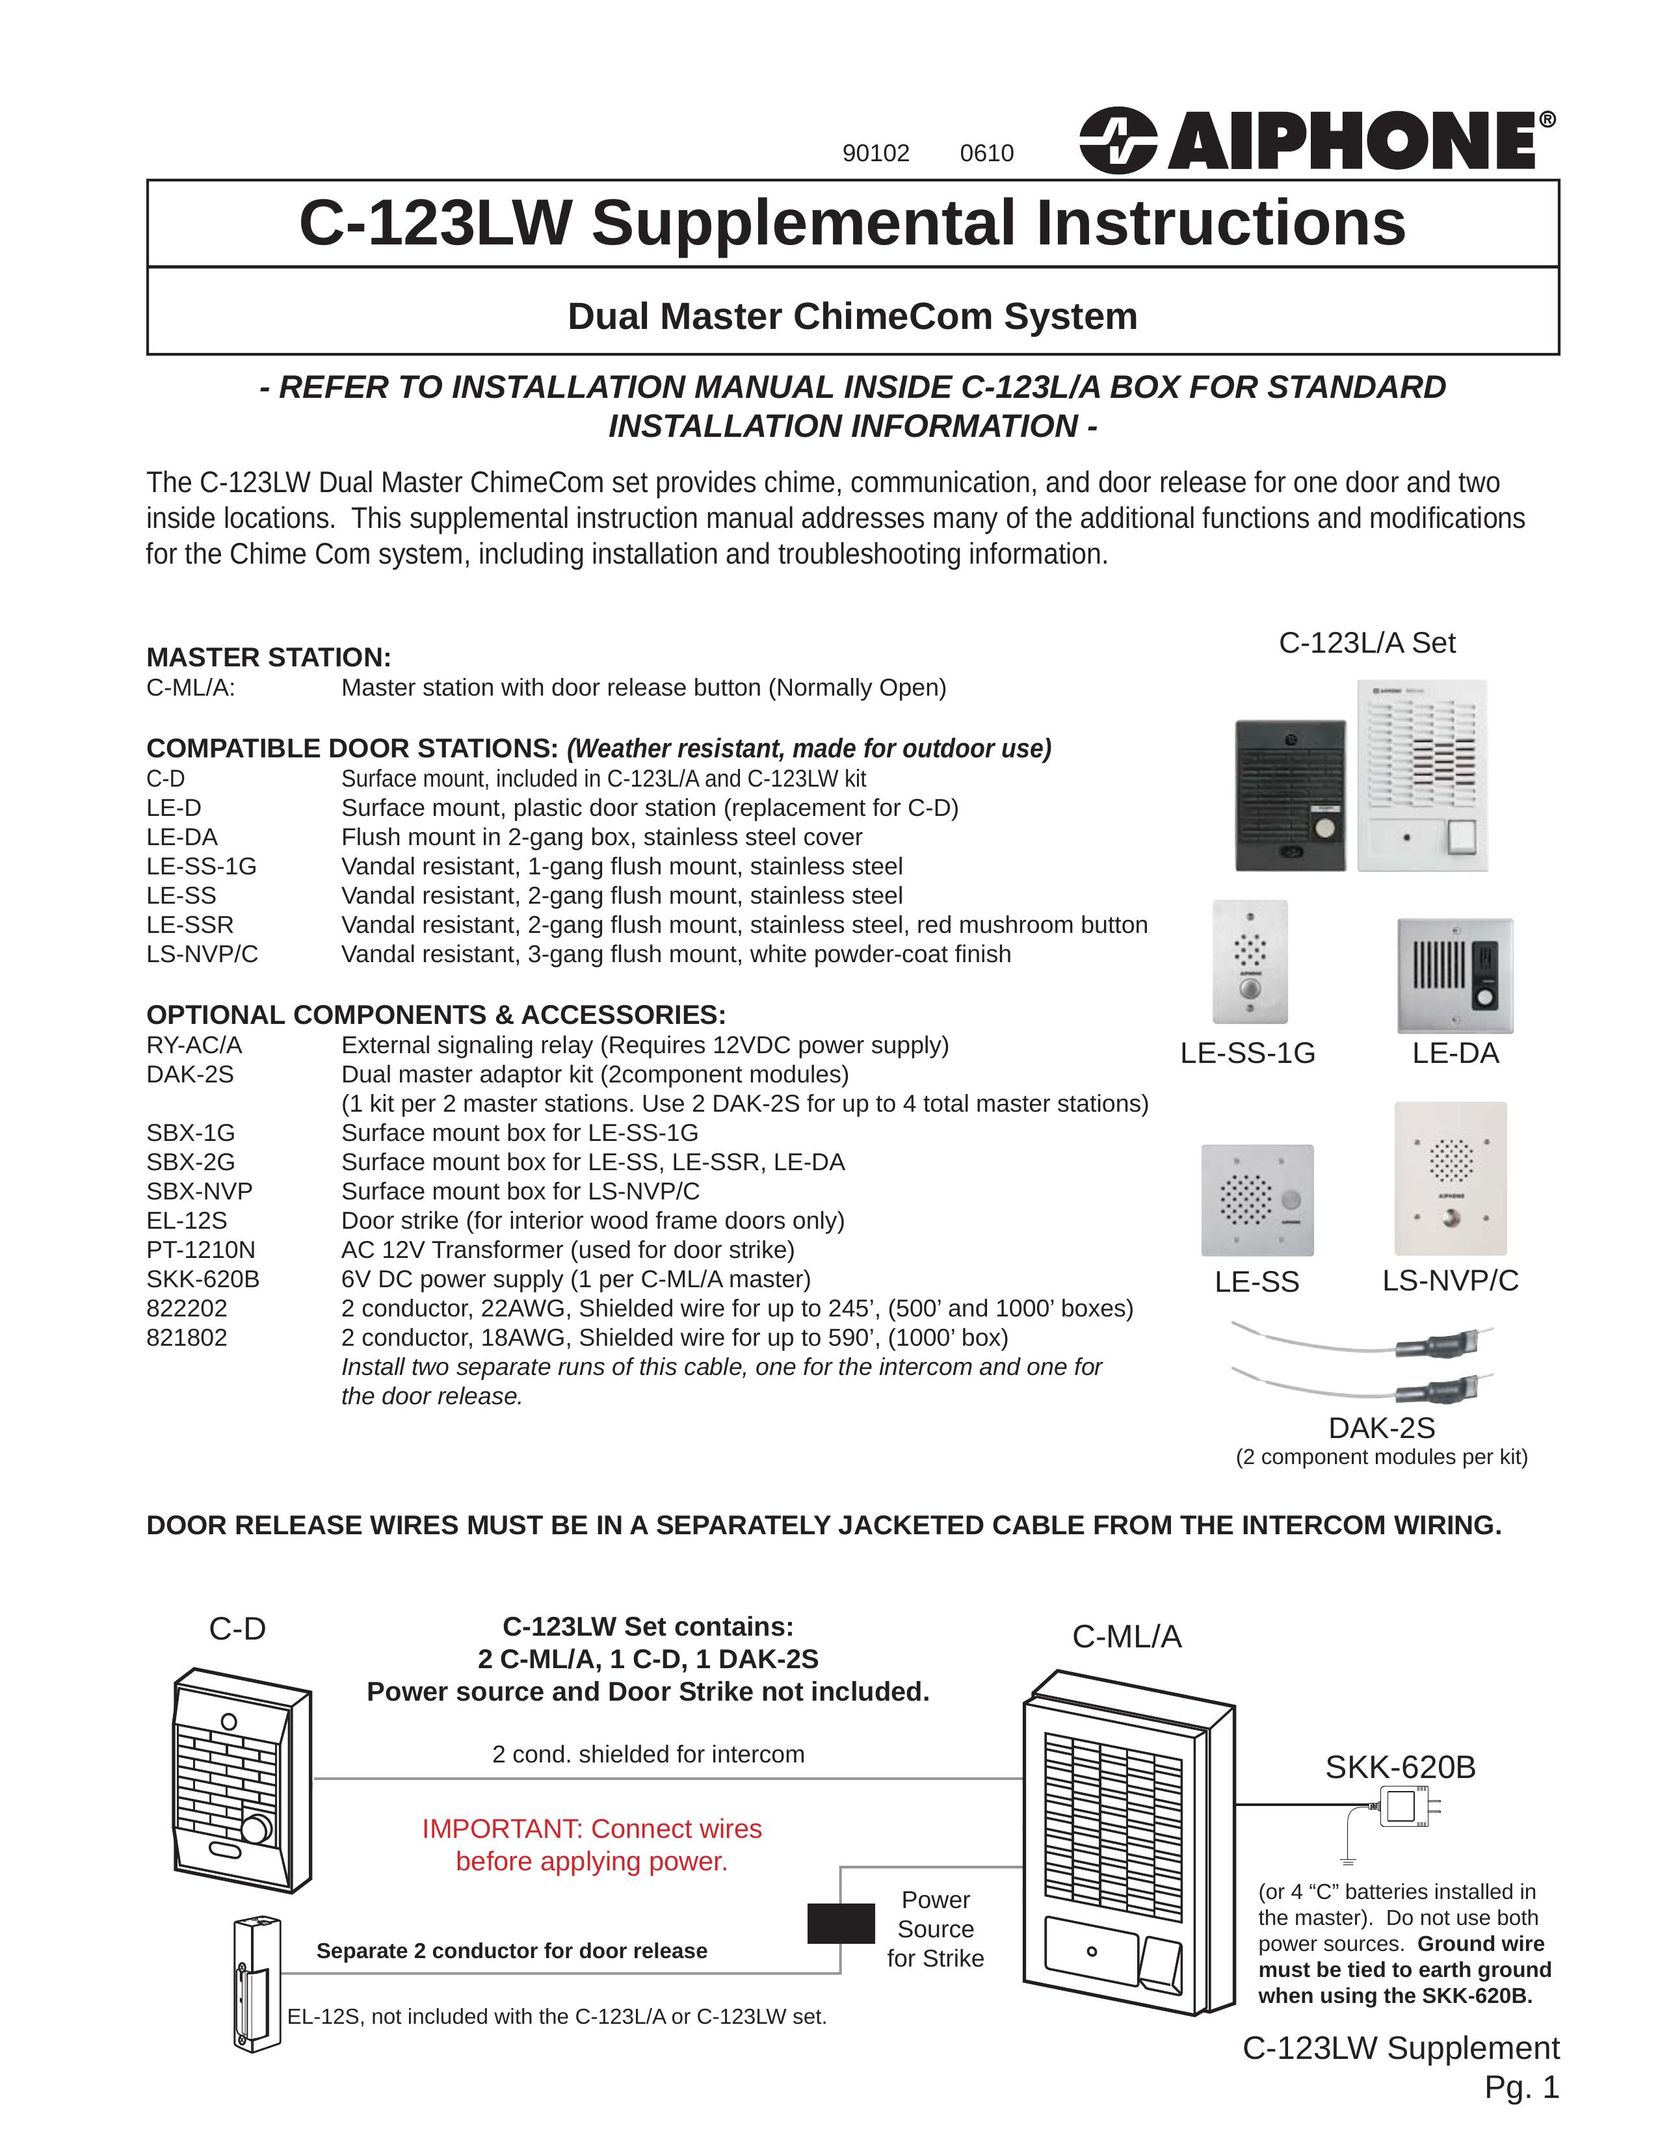 Aiphone C-123LW Intercom System User Manual